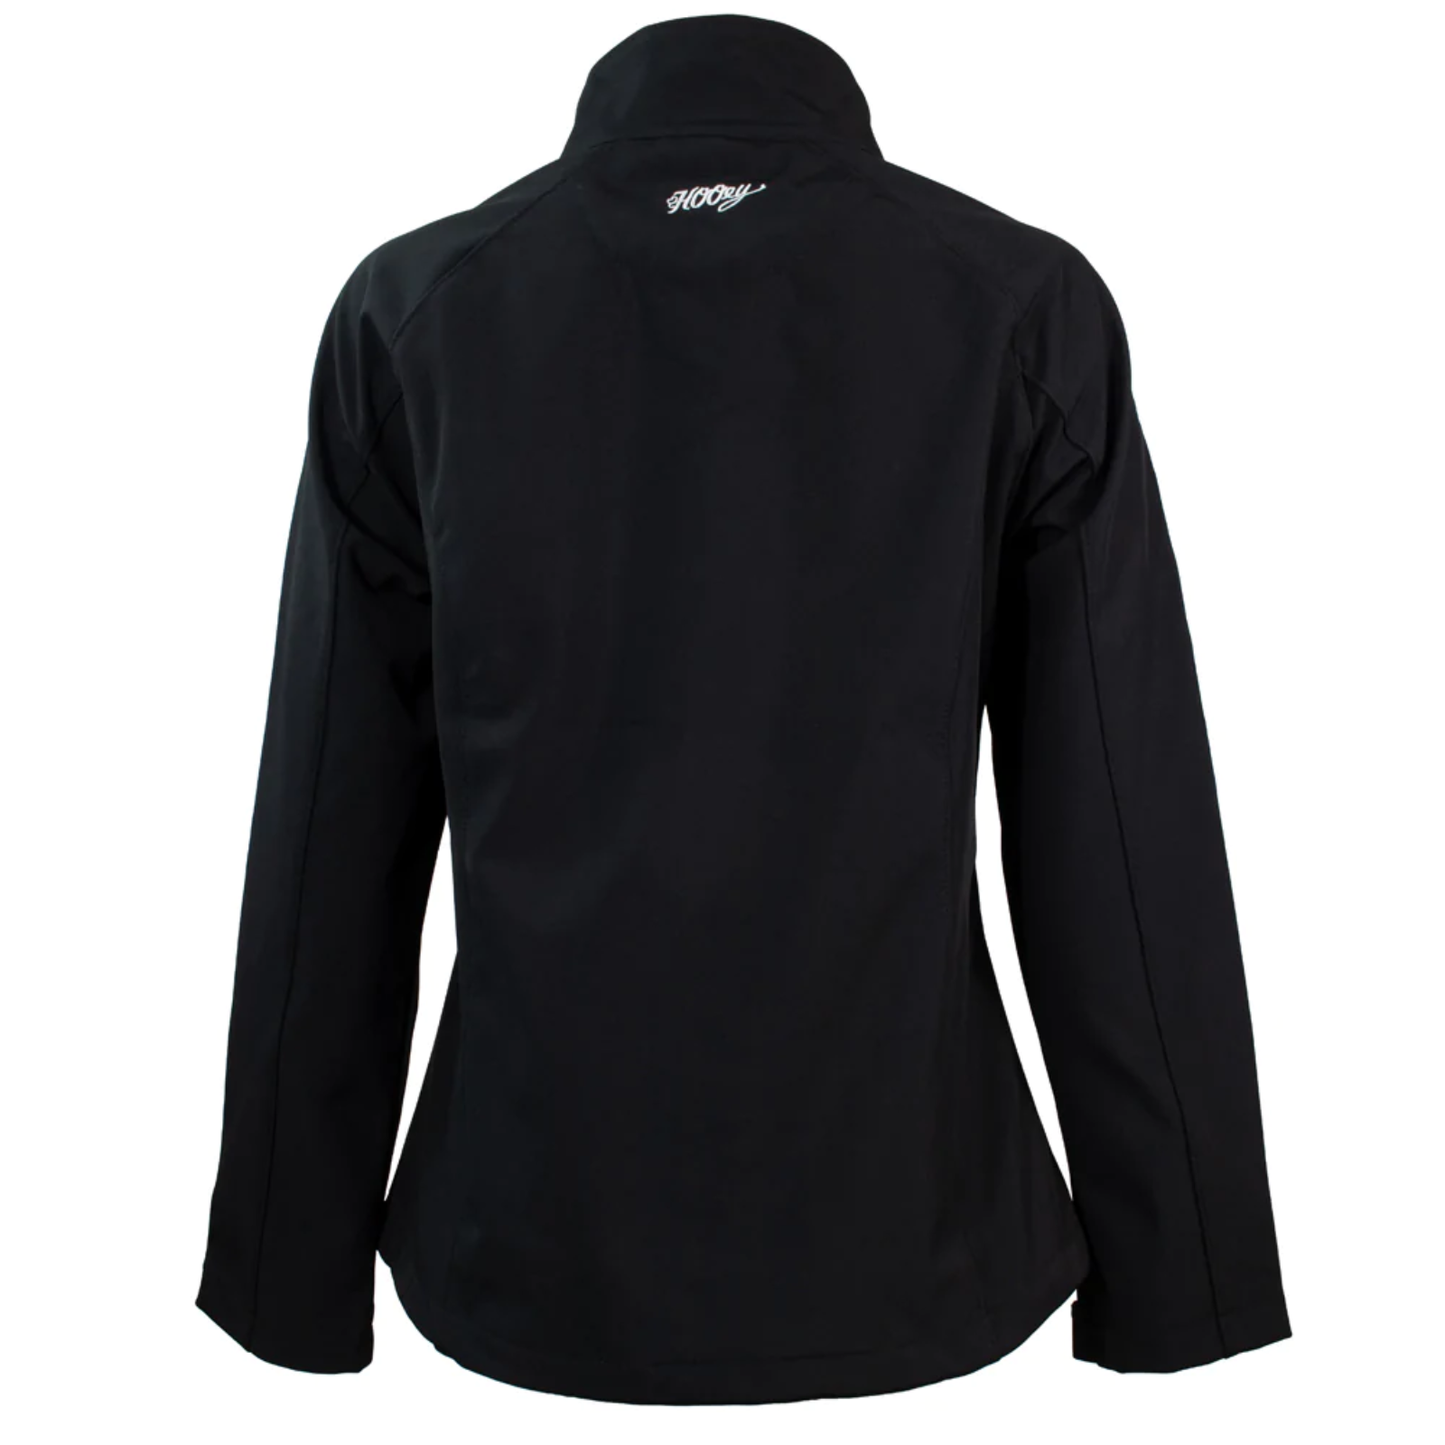 Hooey® Ladies Softshell Logo Black Jacket HJ105BK